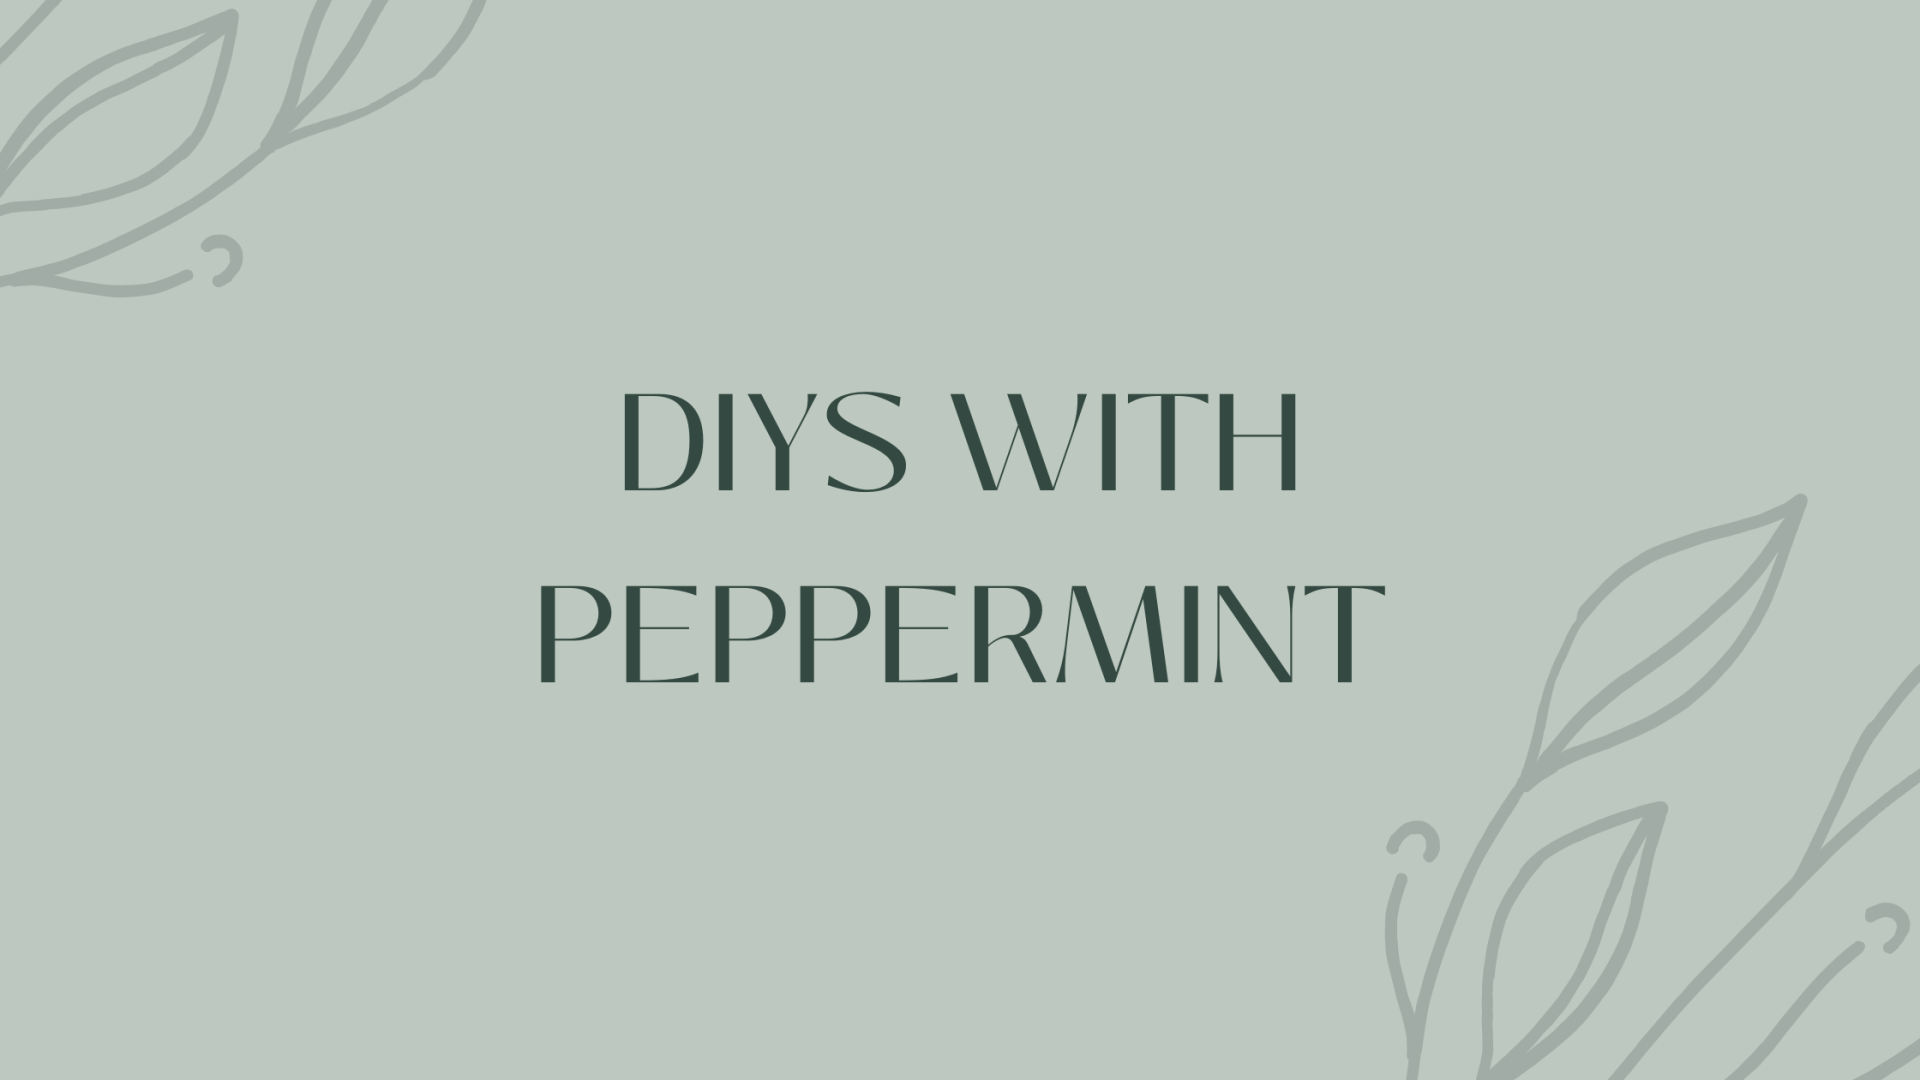 DIYS with Peppermint